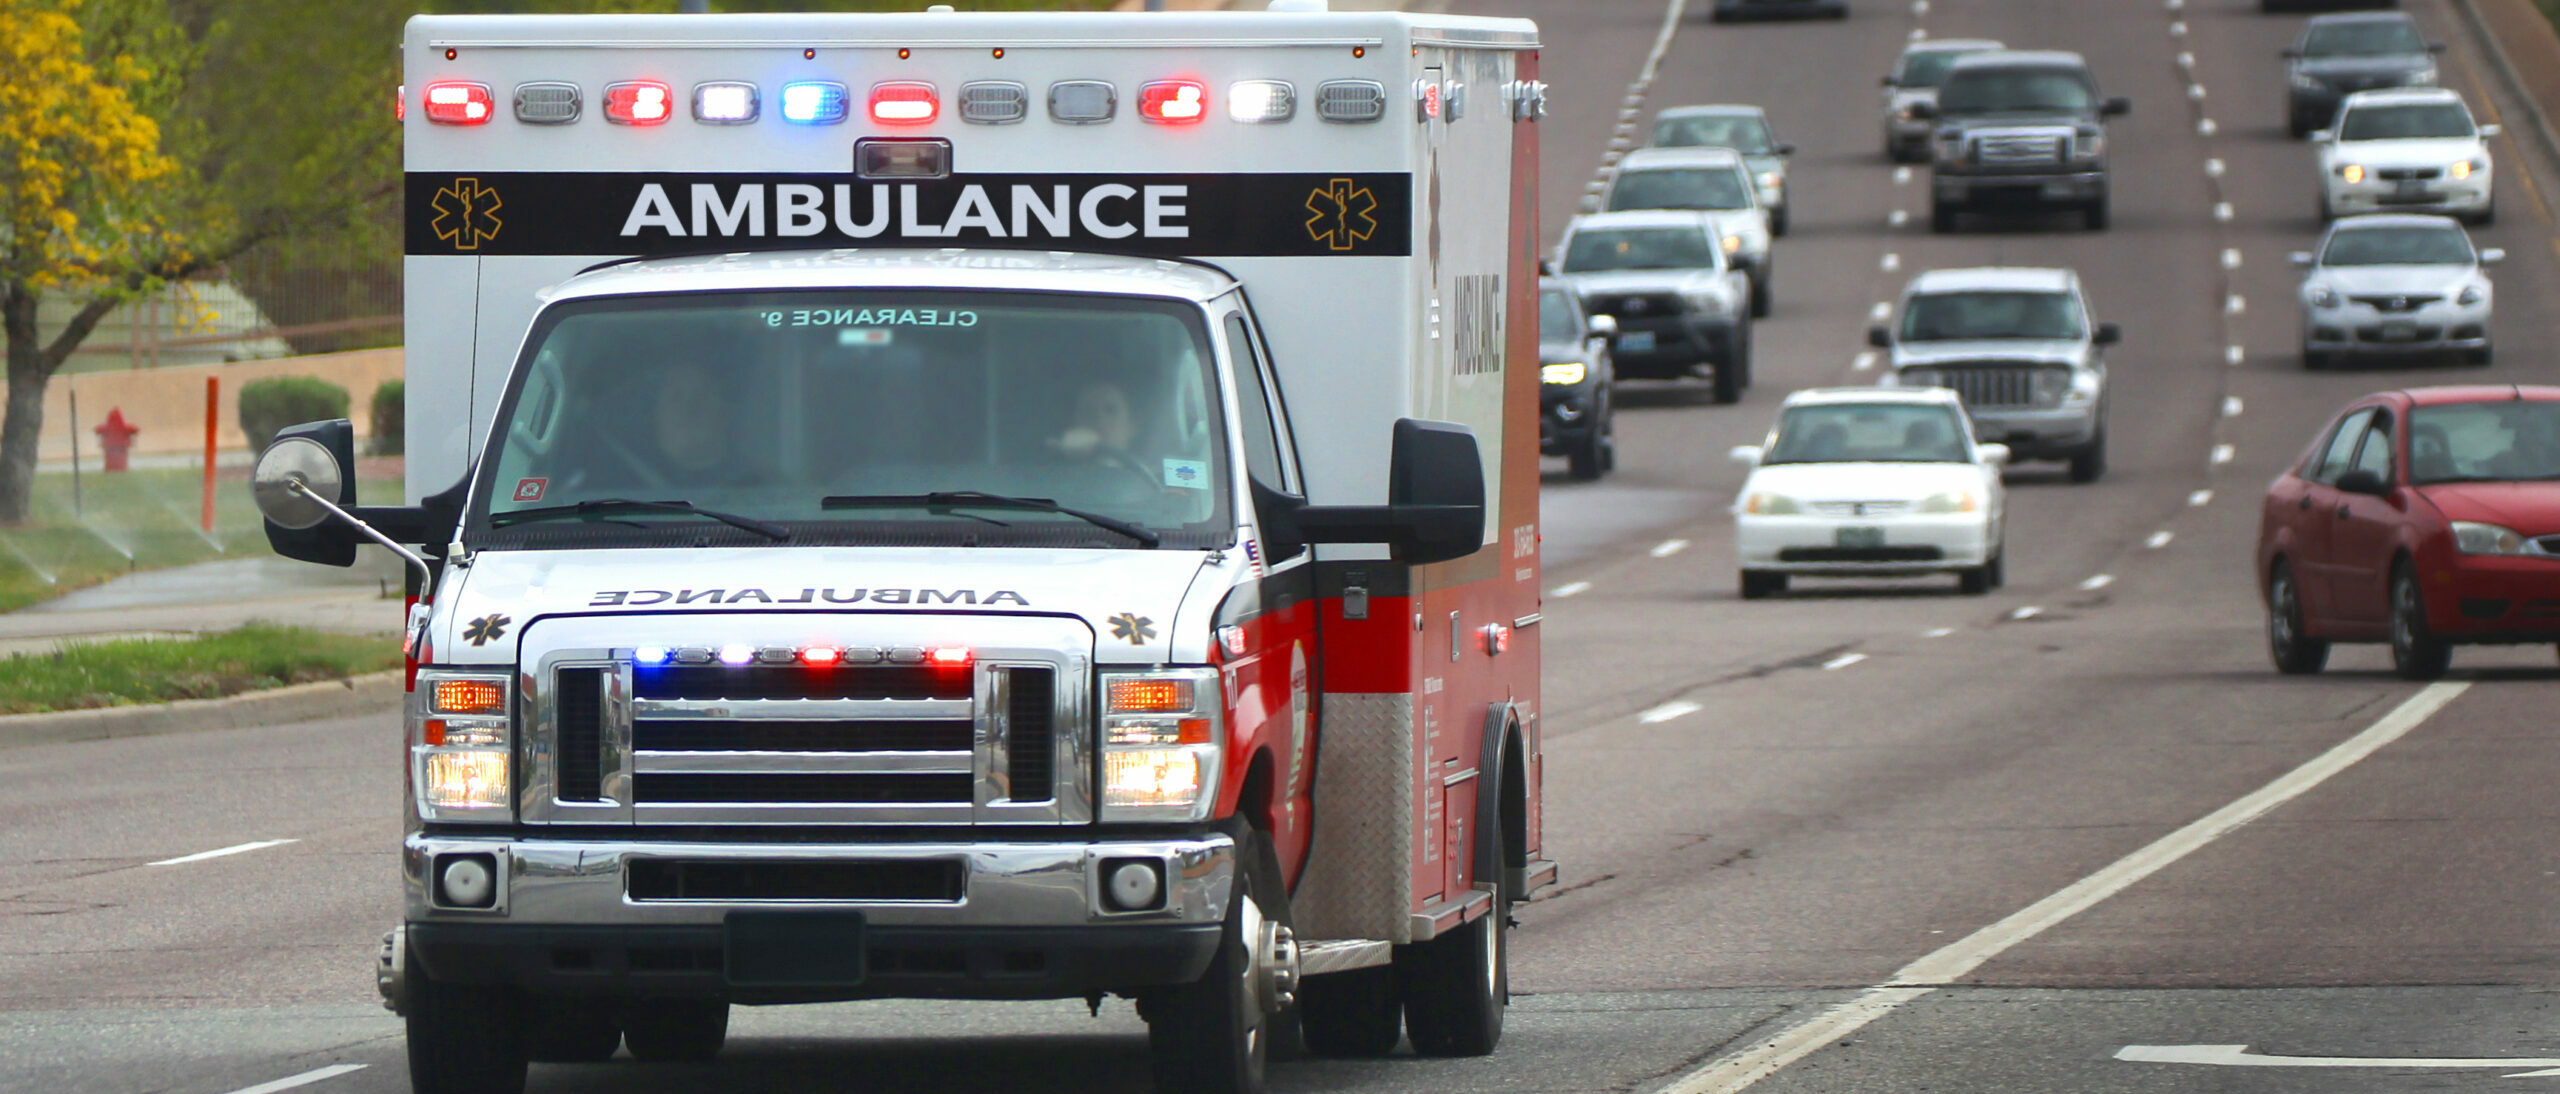 Comstar Ambulance Billing Service Data Breach Investigation